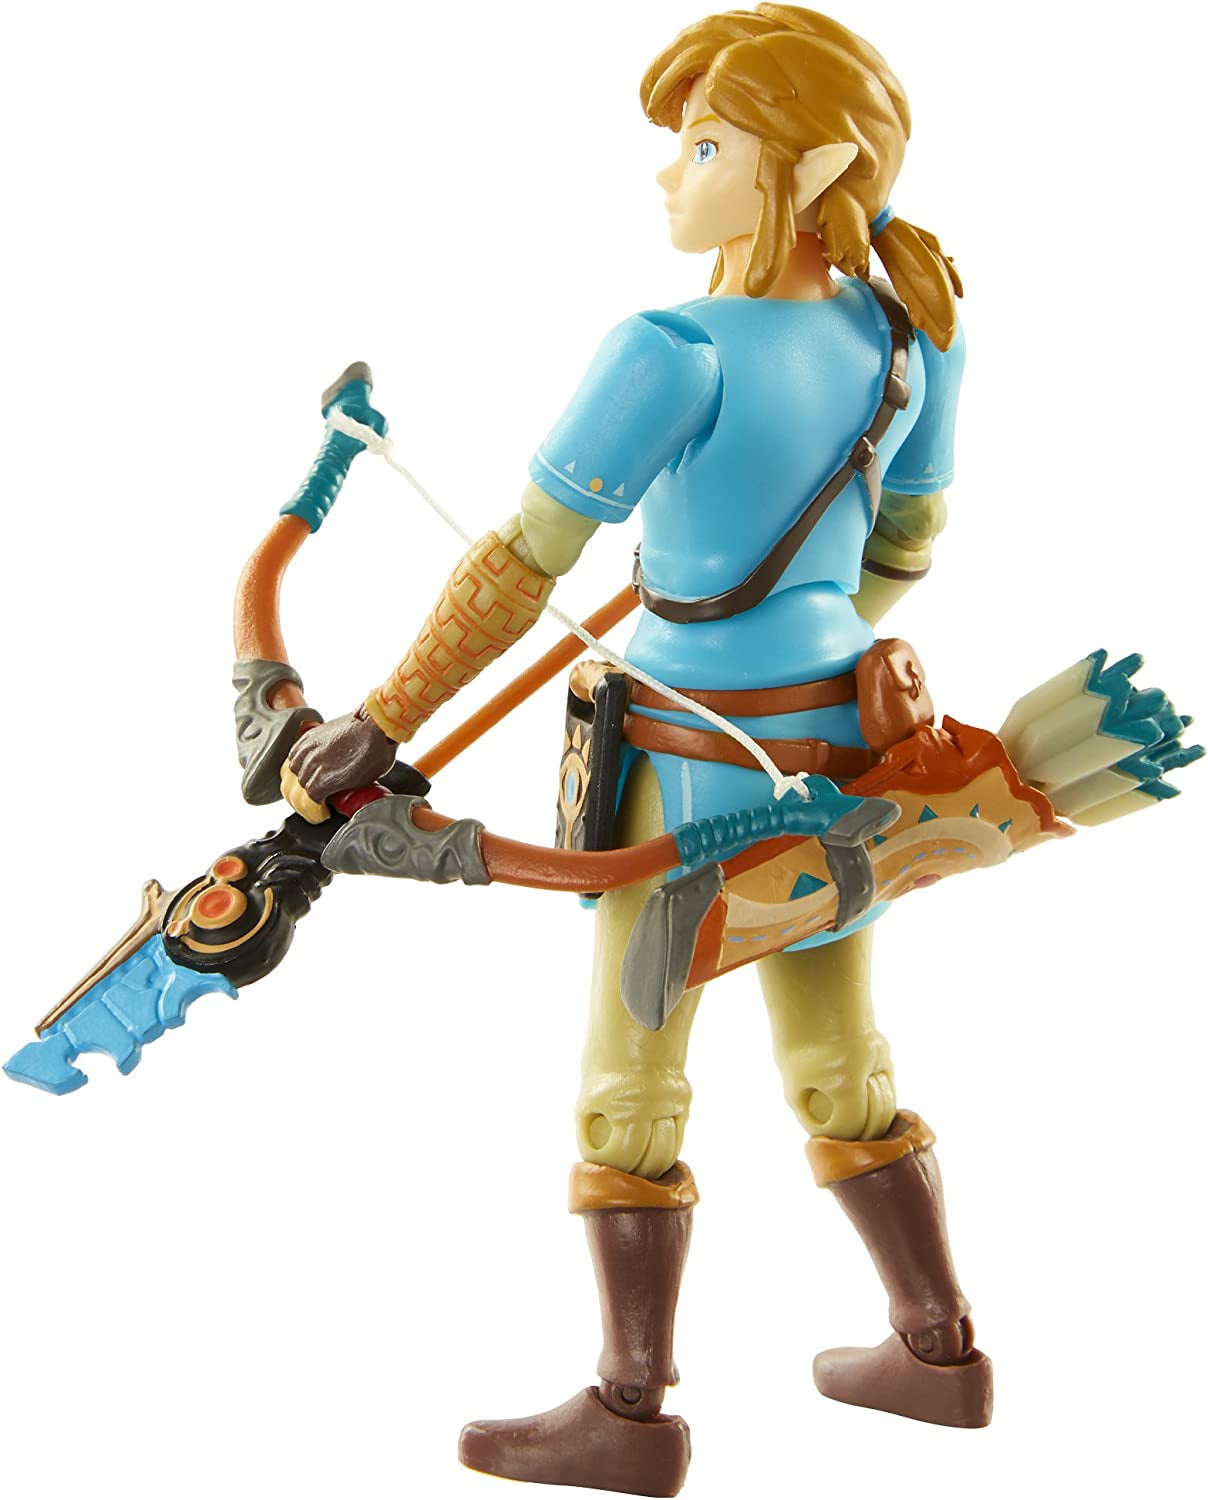 World of Nintendo the Legend of Zelda: Breath of the Wild Link 4 Inch Action Figure